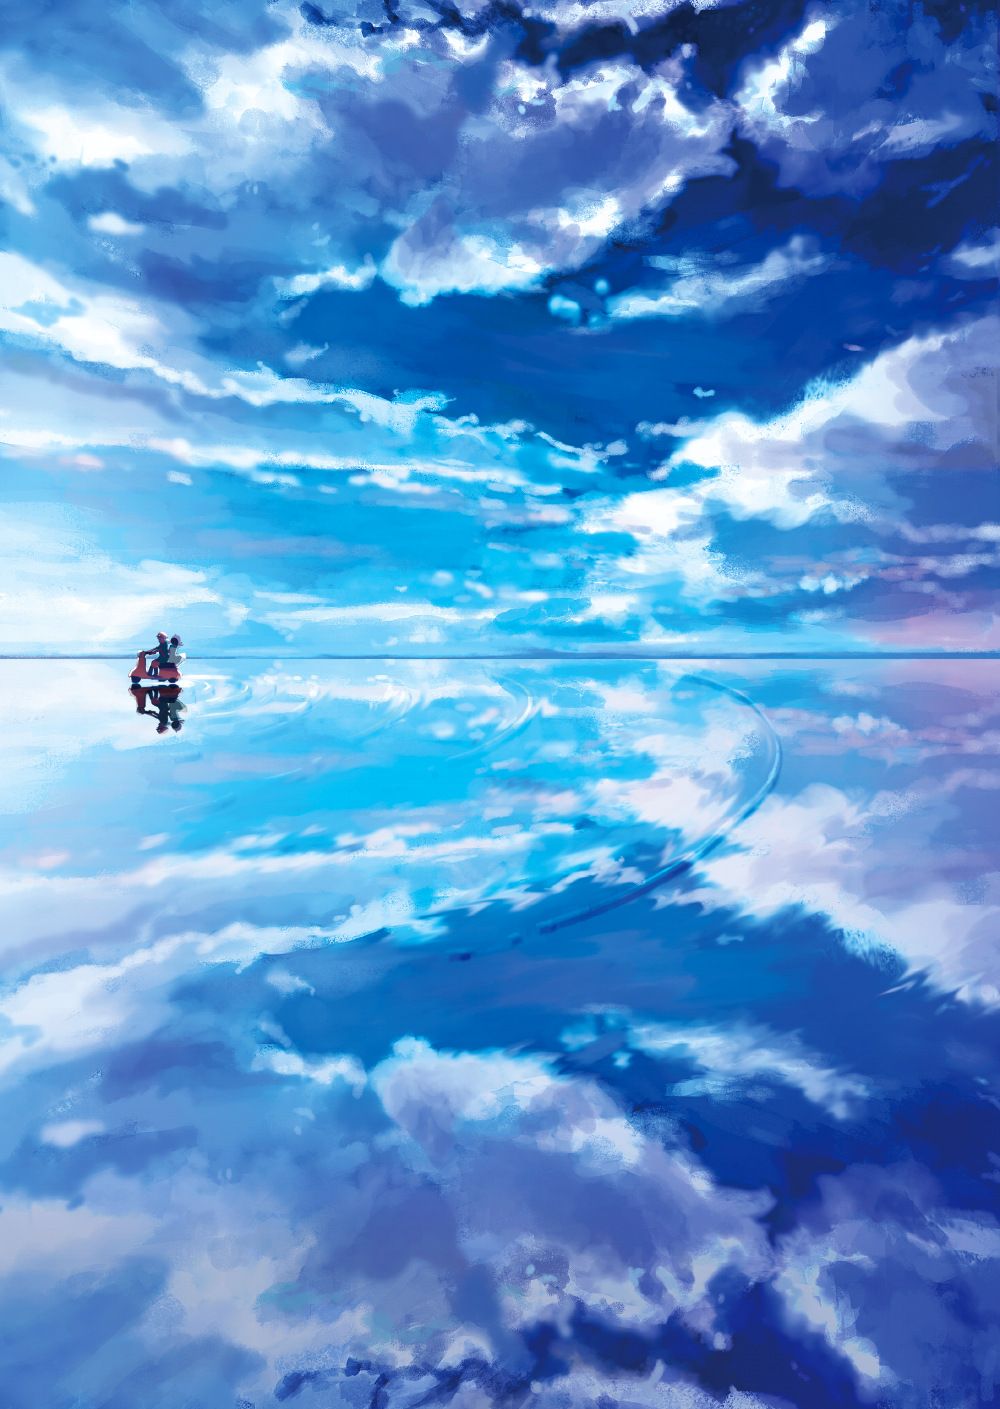 Anime Art, Blue Sky, Water, Reflection, Scooter, Boy Girl. Anime